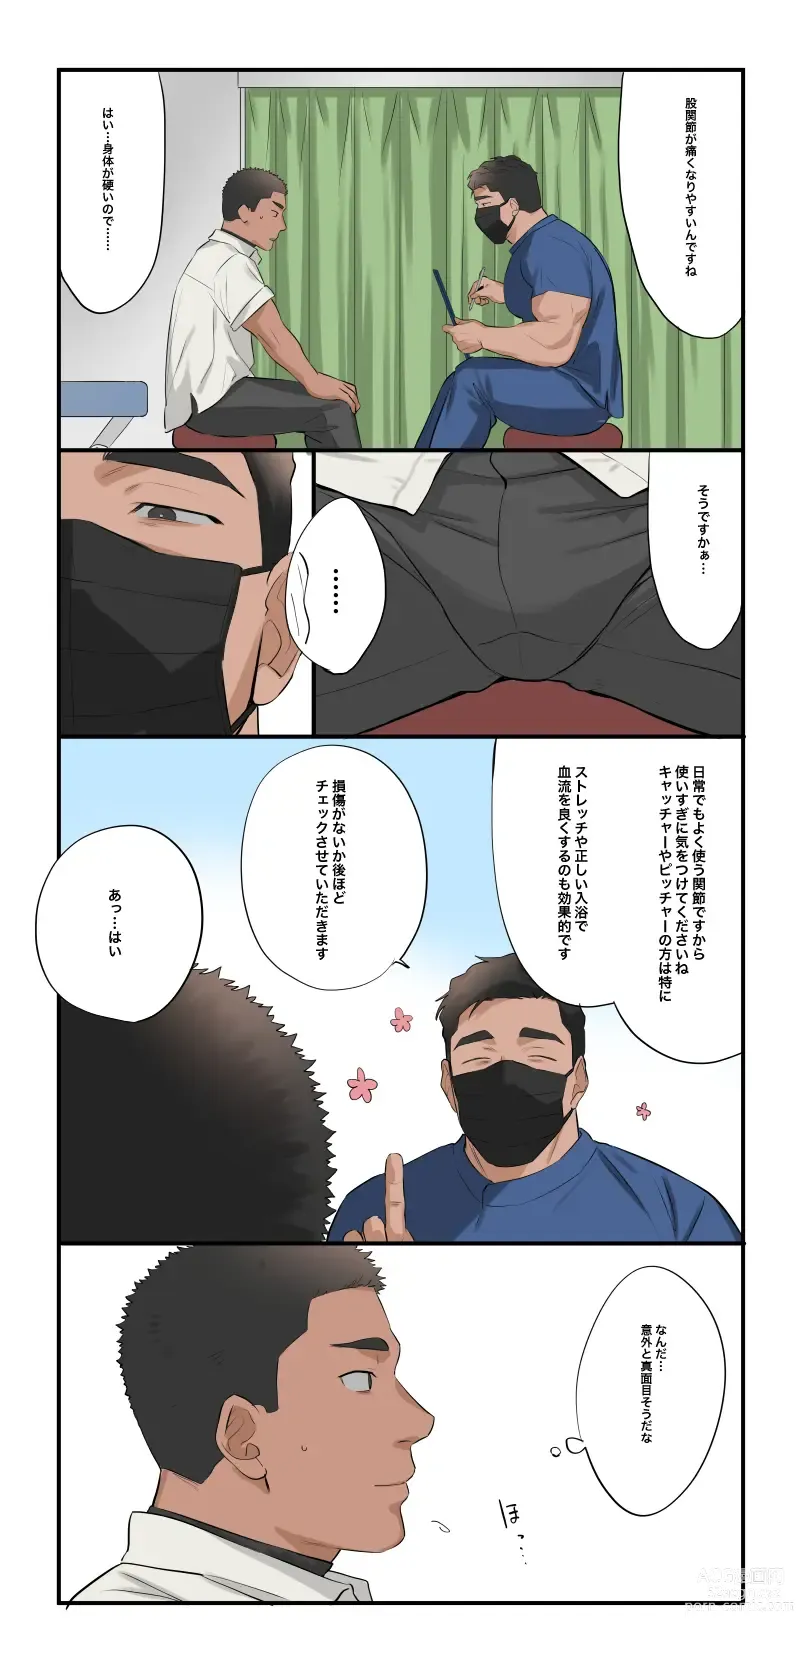 Page 6 of doujinshi Massage 1